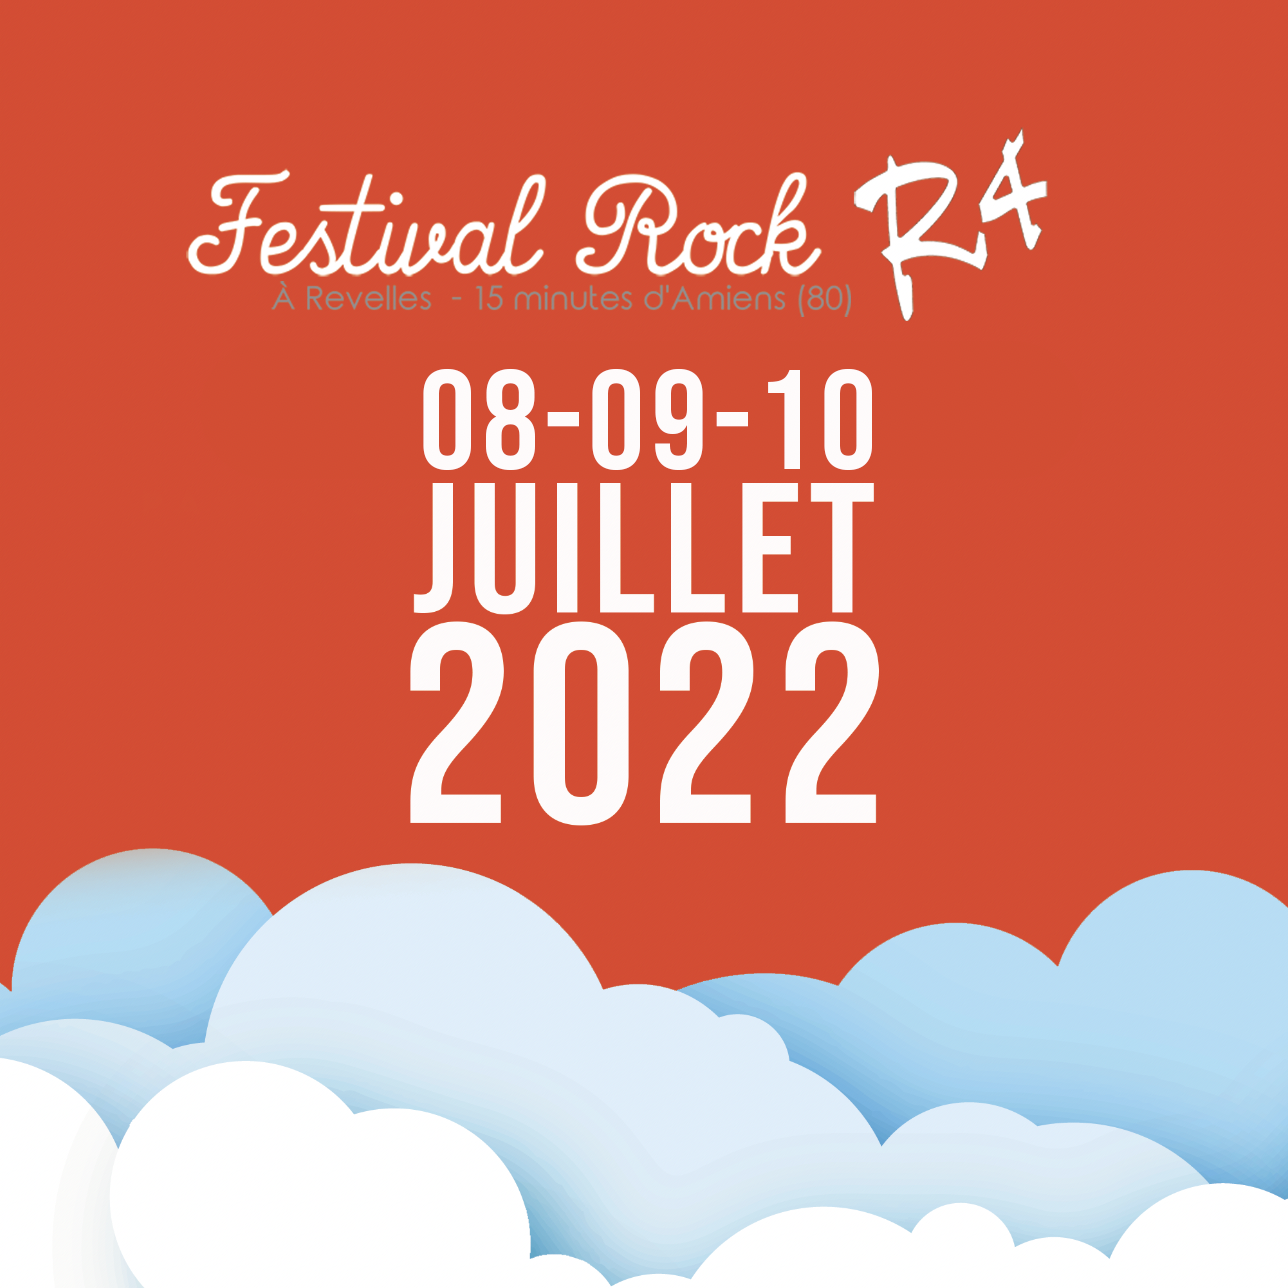 Festival Rock R4